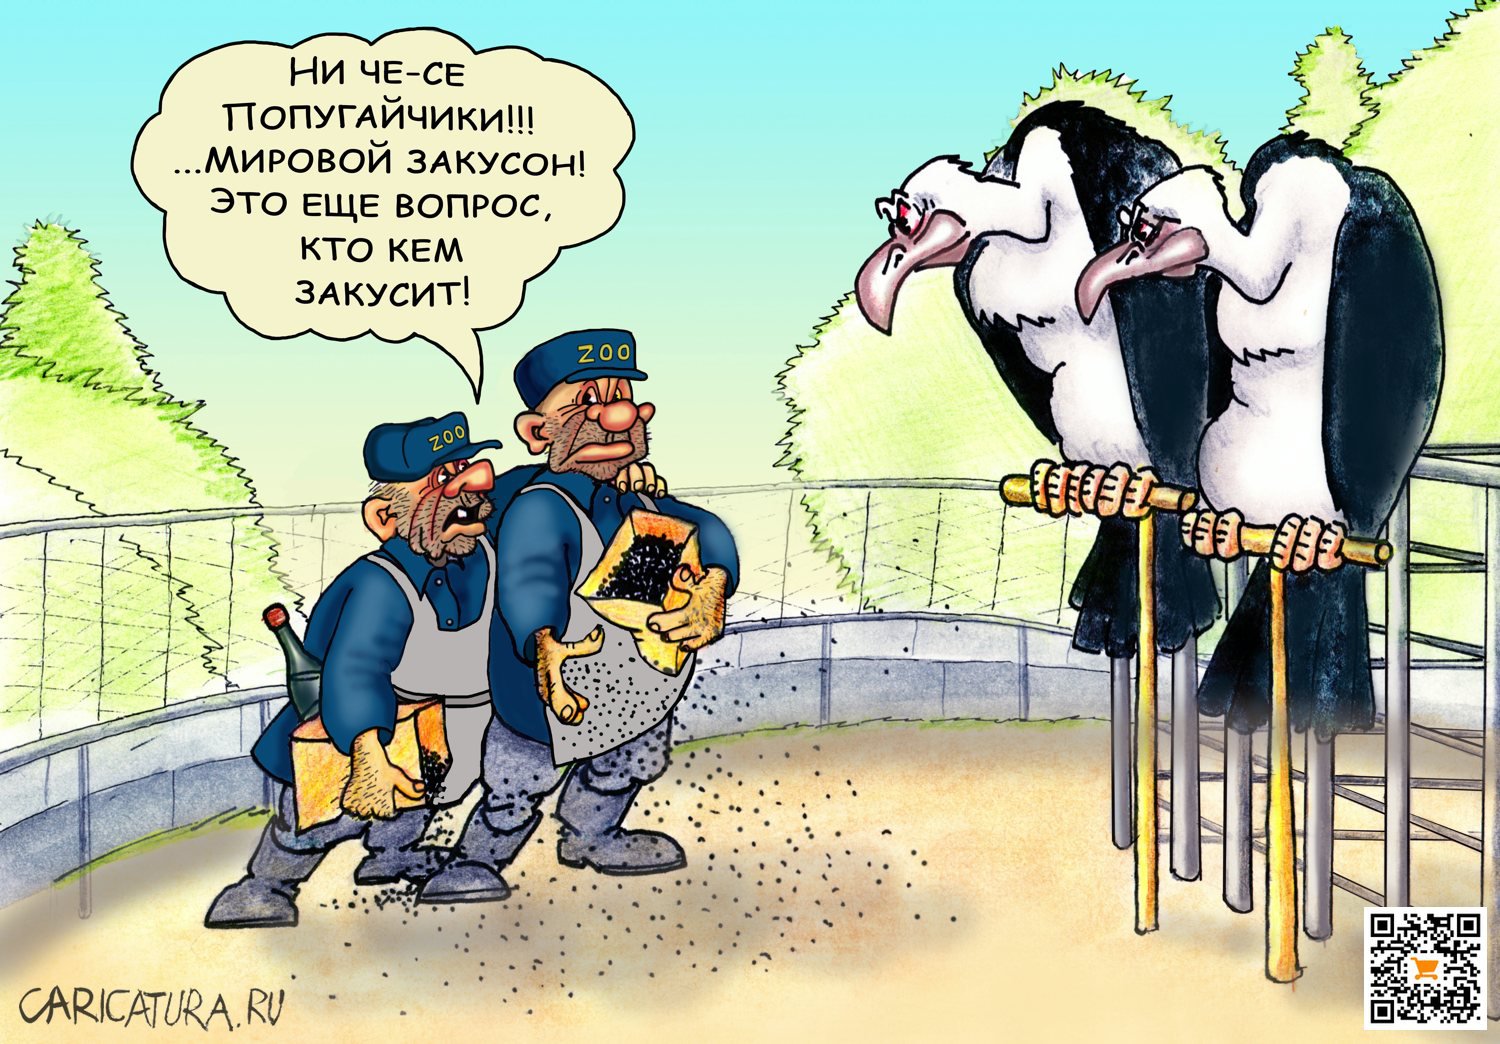 Карикатура "Попугайчики", Раф Карин